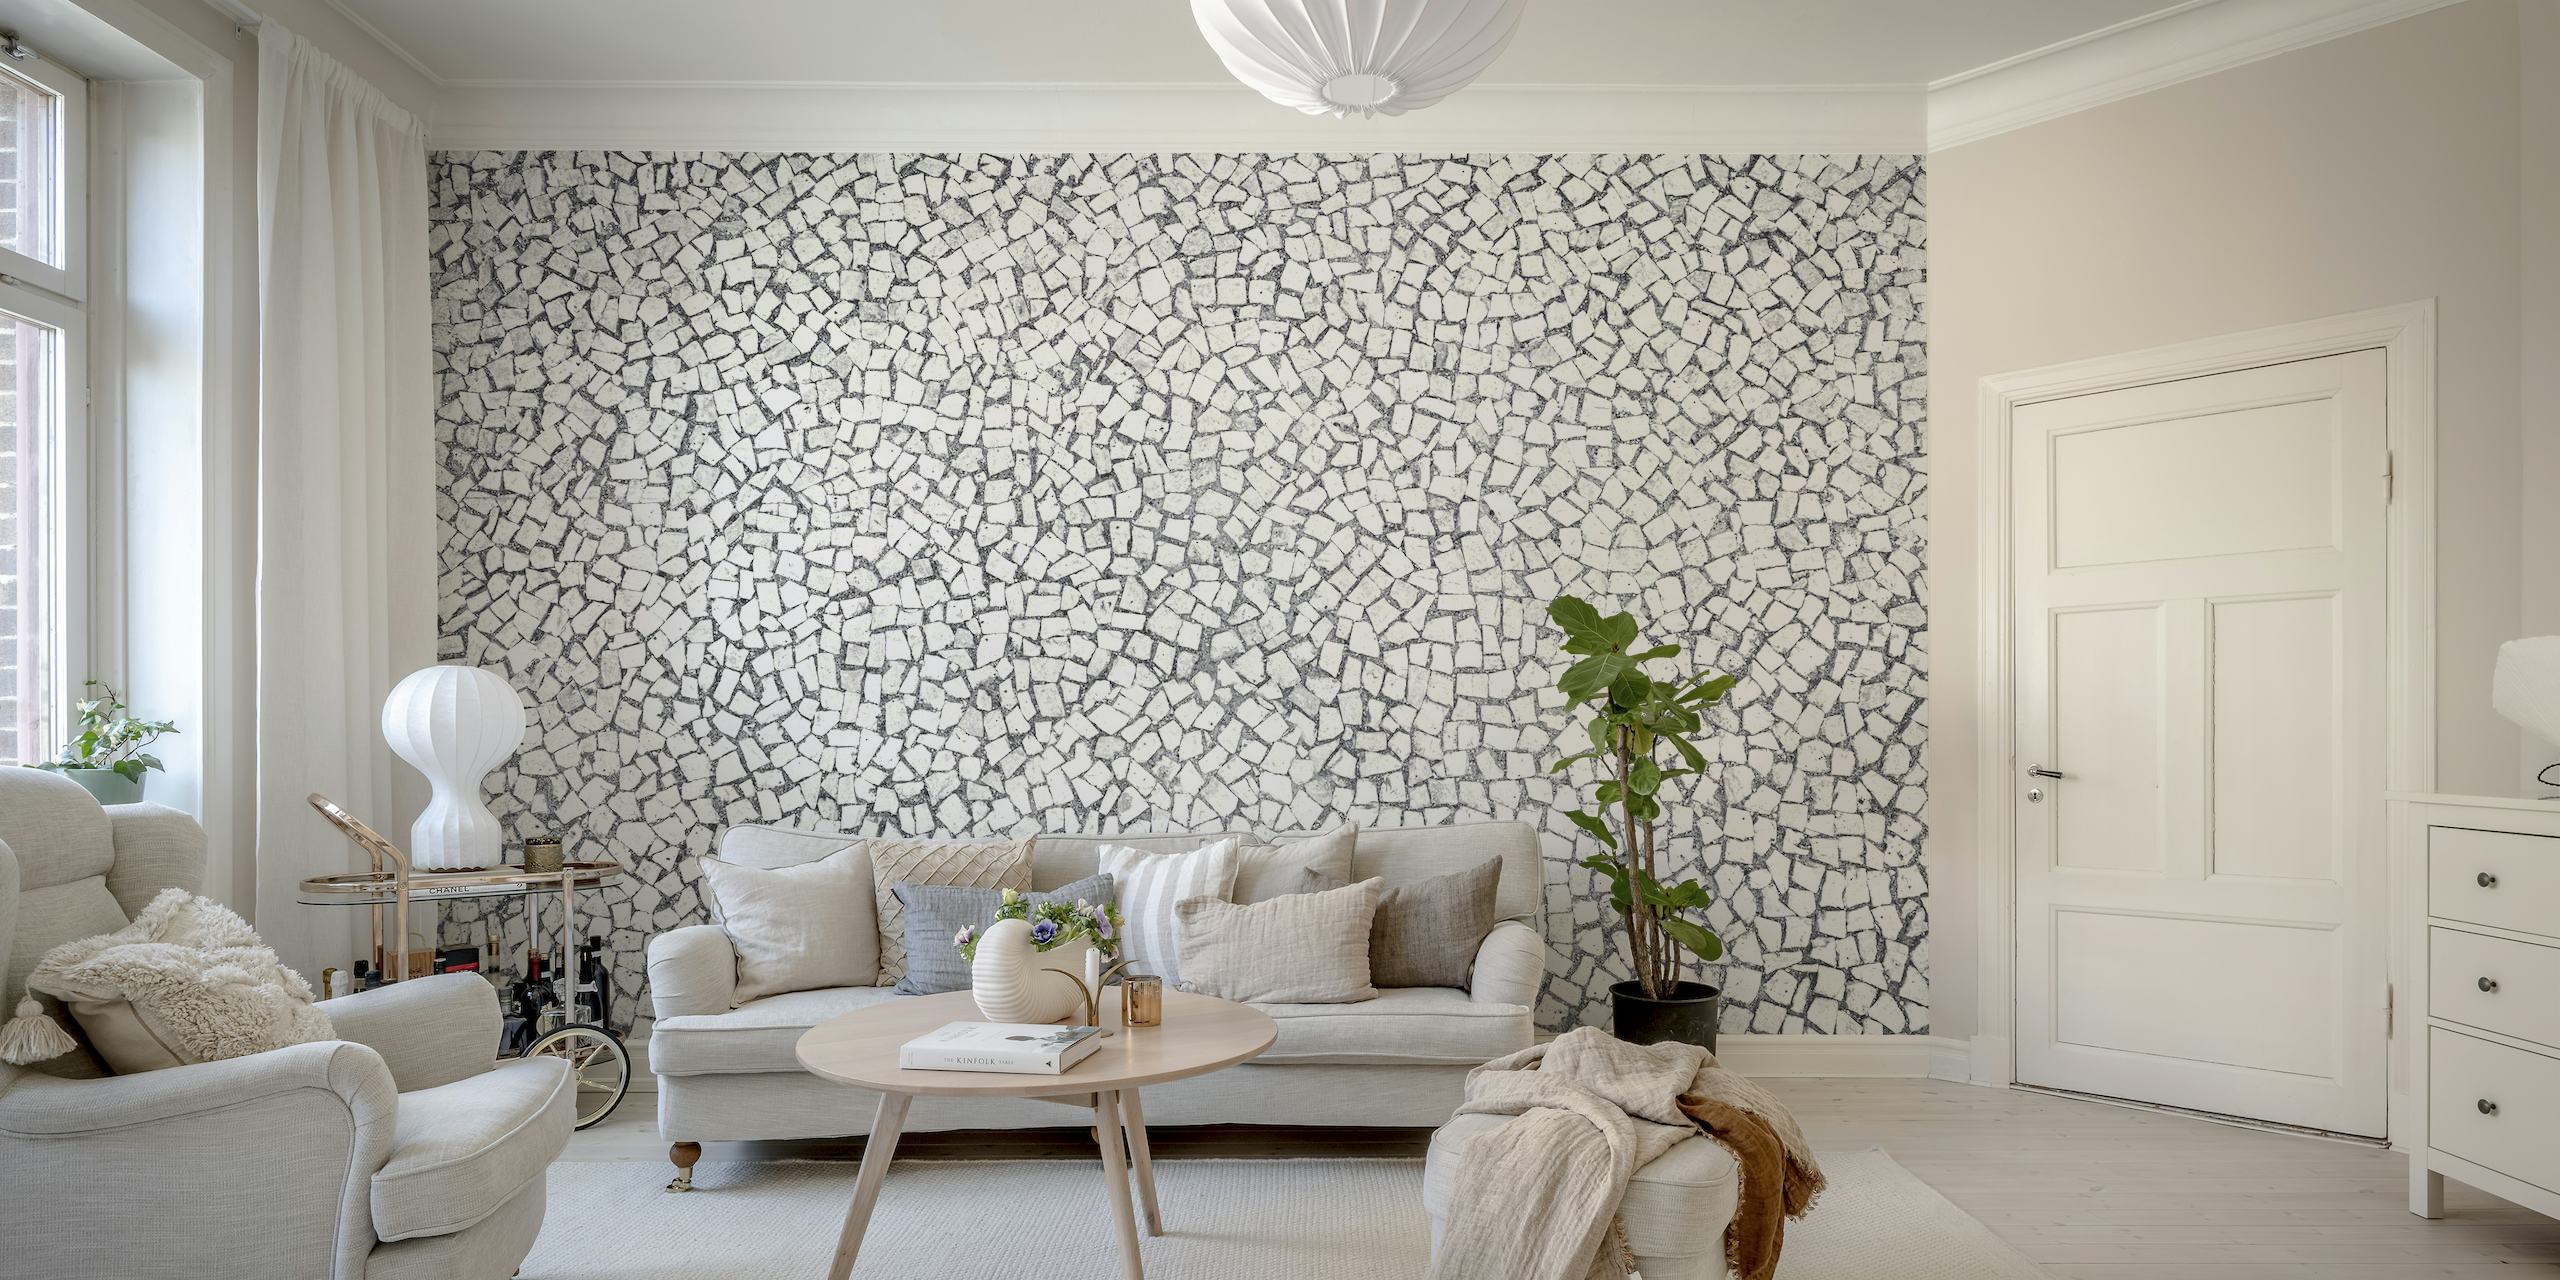 Monochrome mosaic tile pattern wall mural